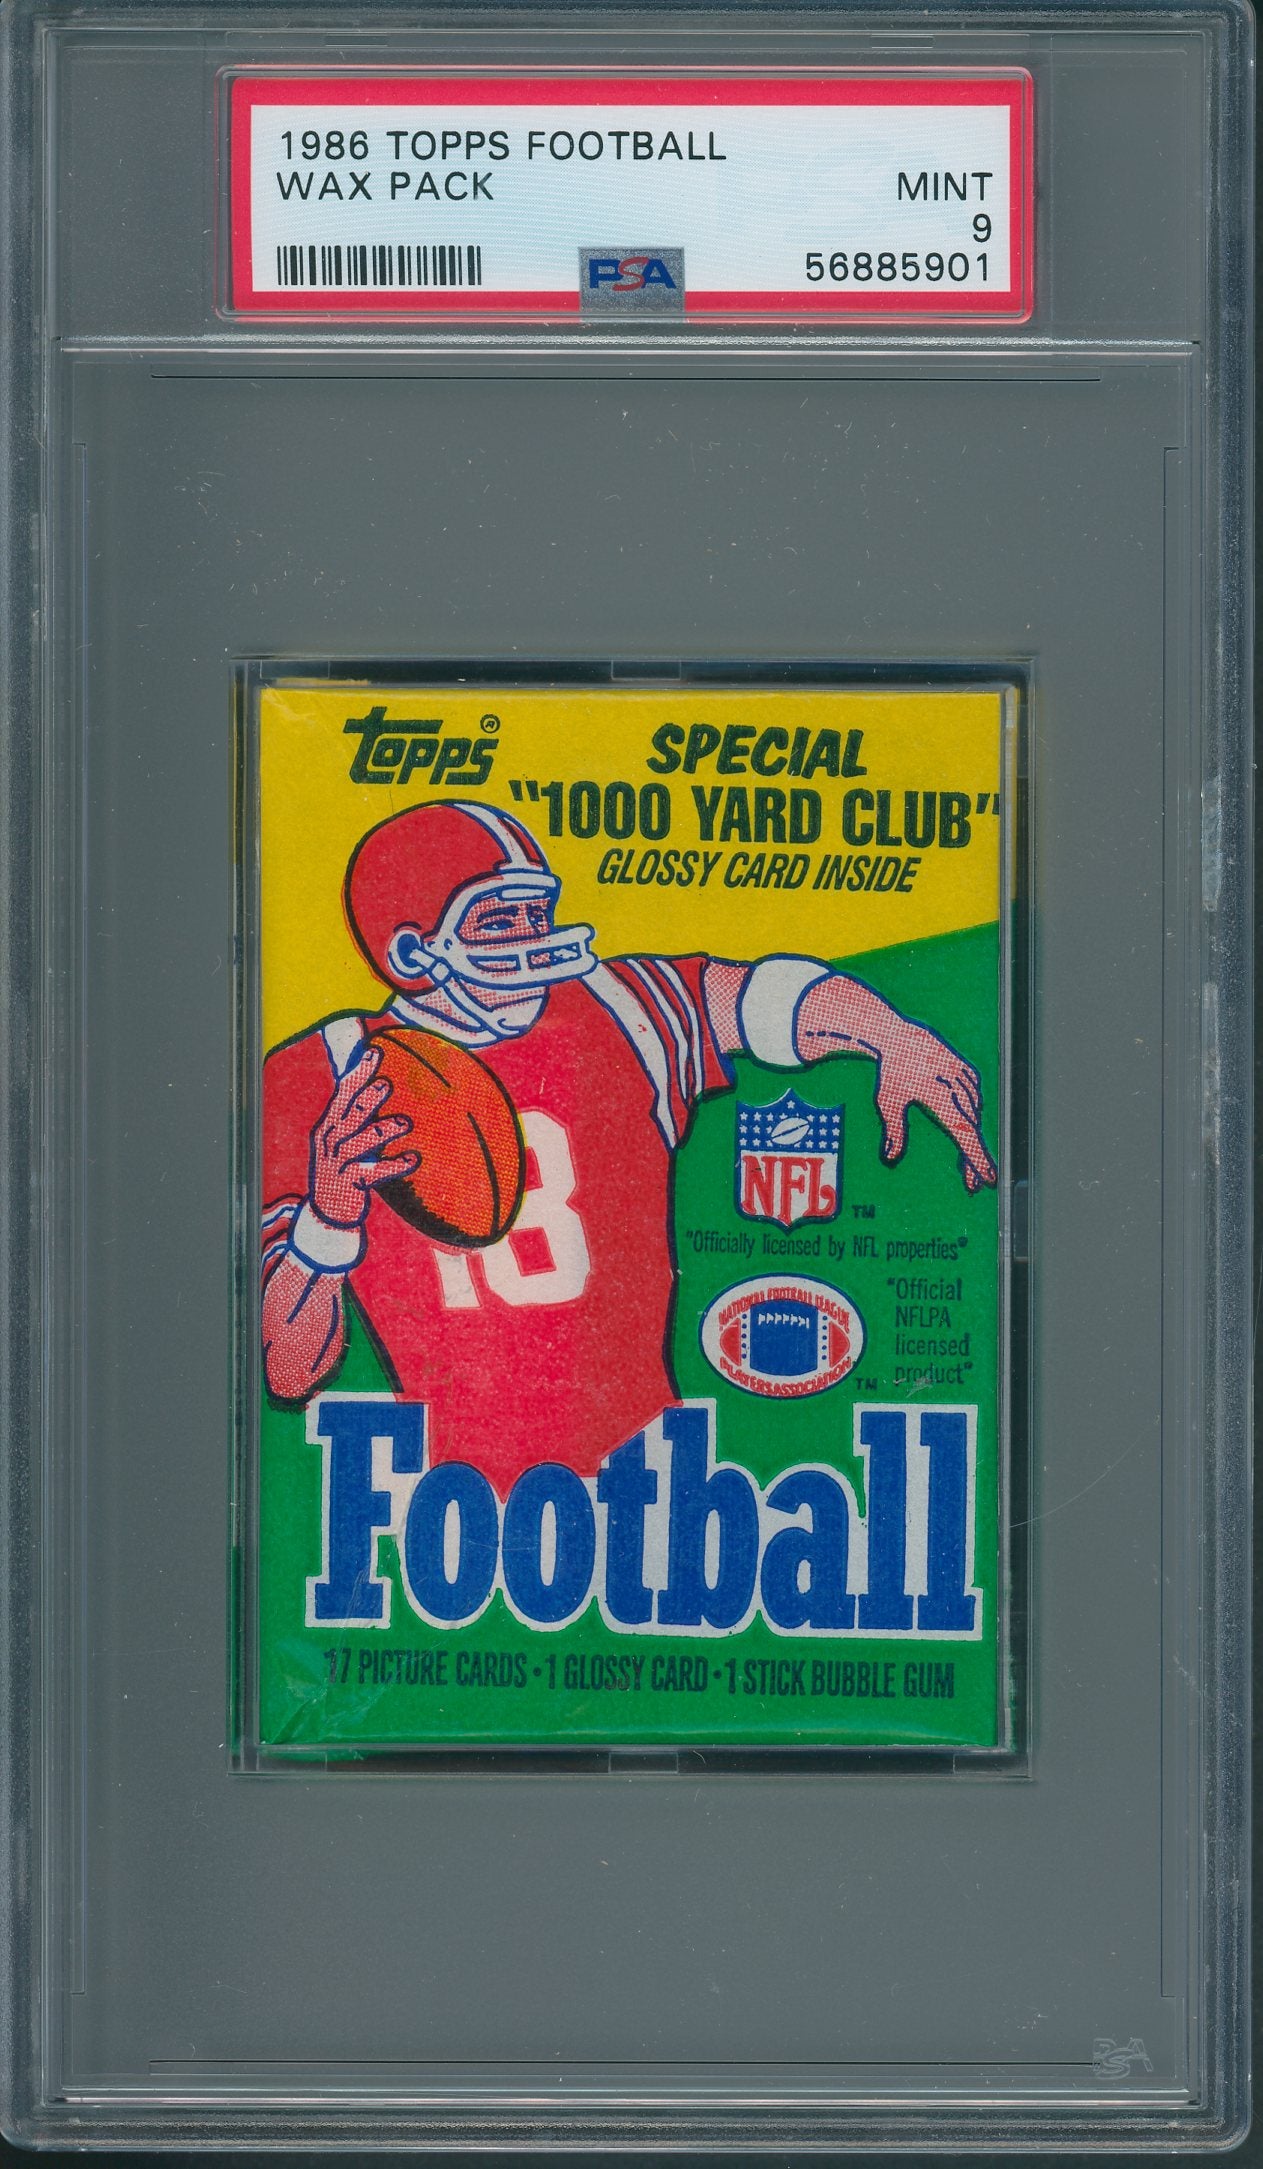 1986 Topps Football Unopened Wax Pack PSA 9